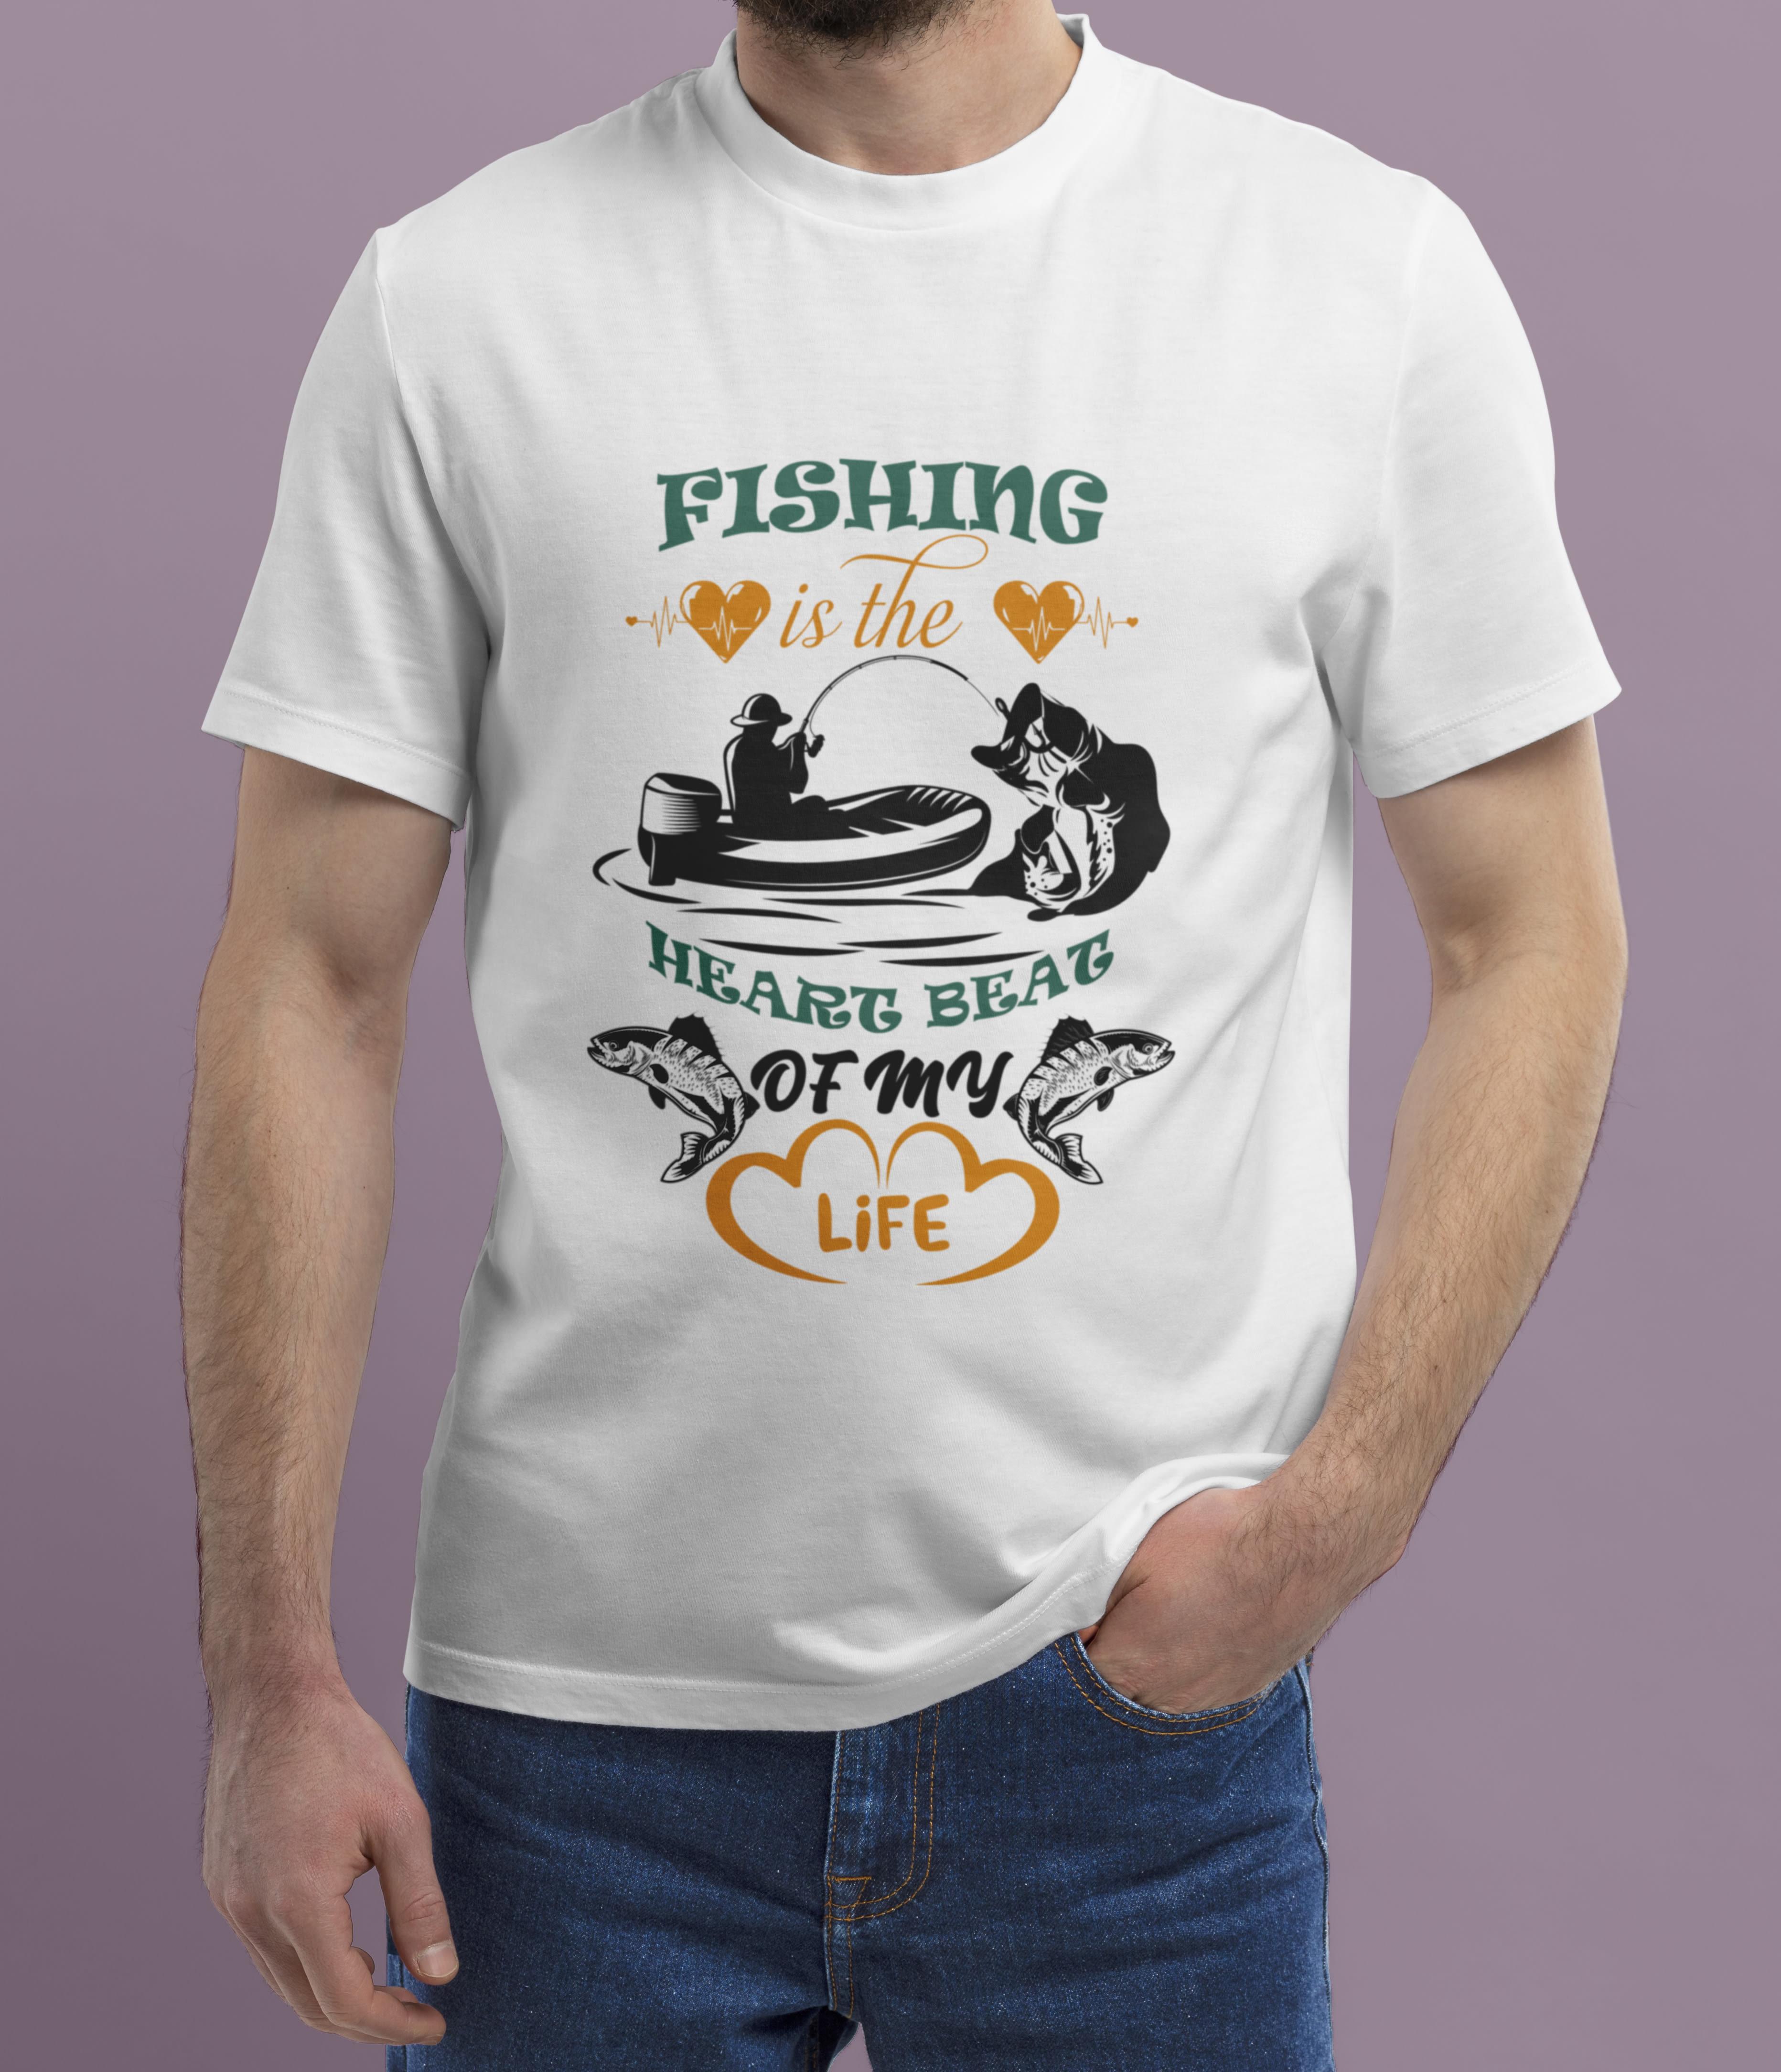 Custom illustrated typography tshirt design for you by Tshirt_design69